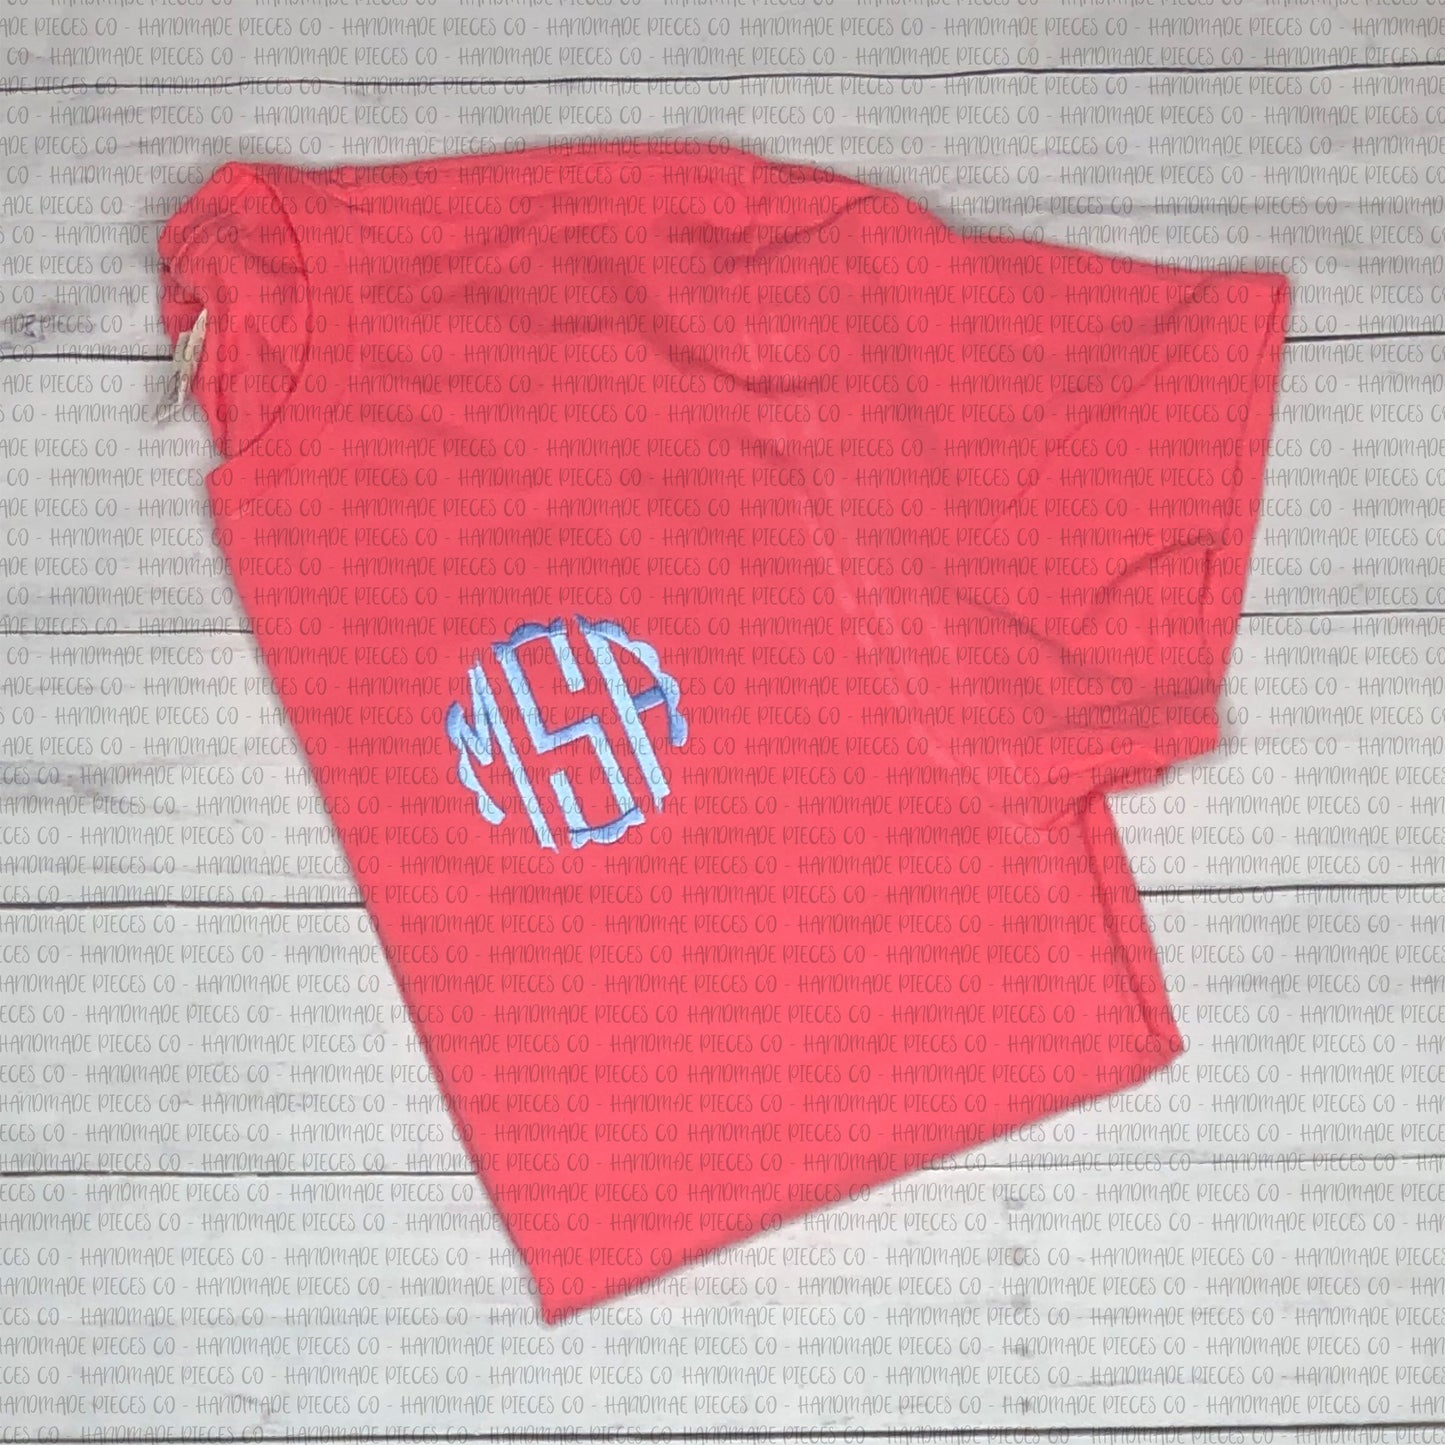 Monogram Embroidered T-Shirt, Sweatshirt, Hoodie, Quarterzip, or